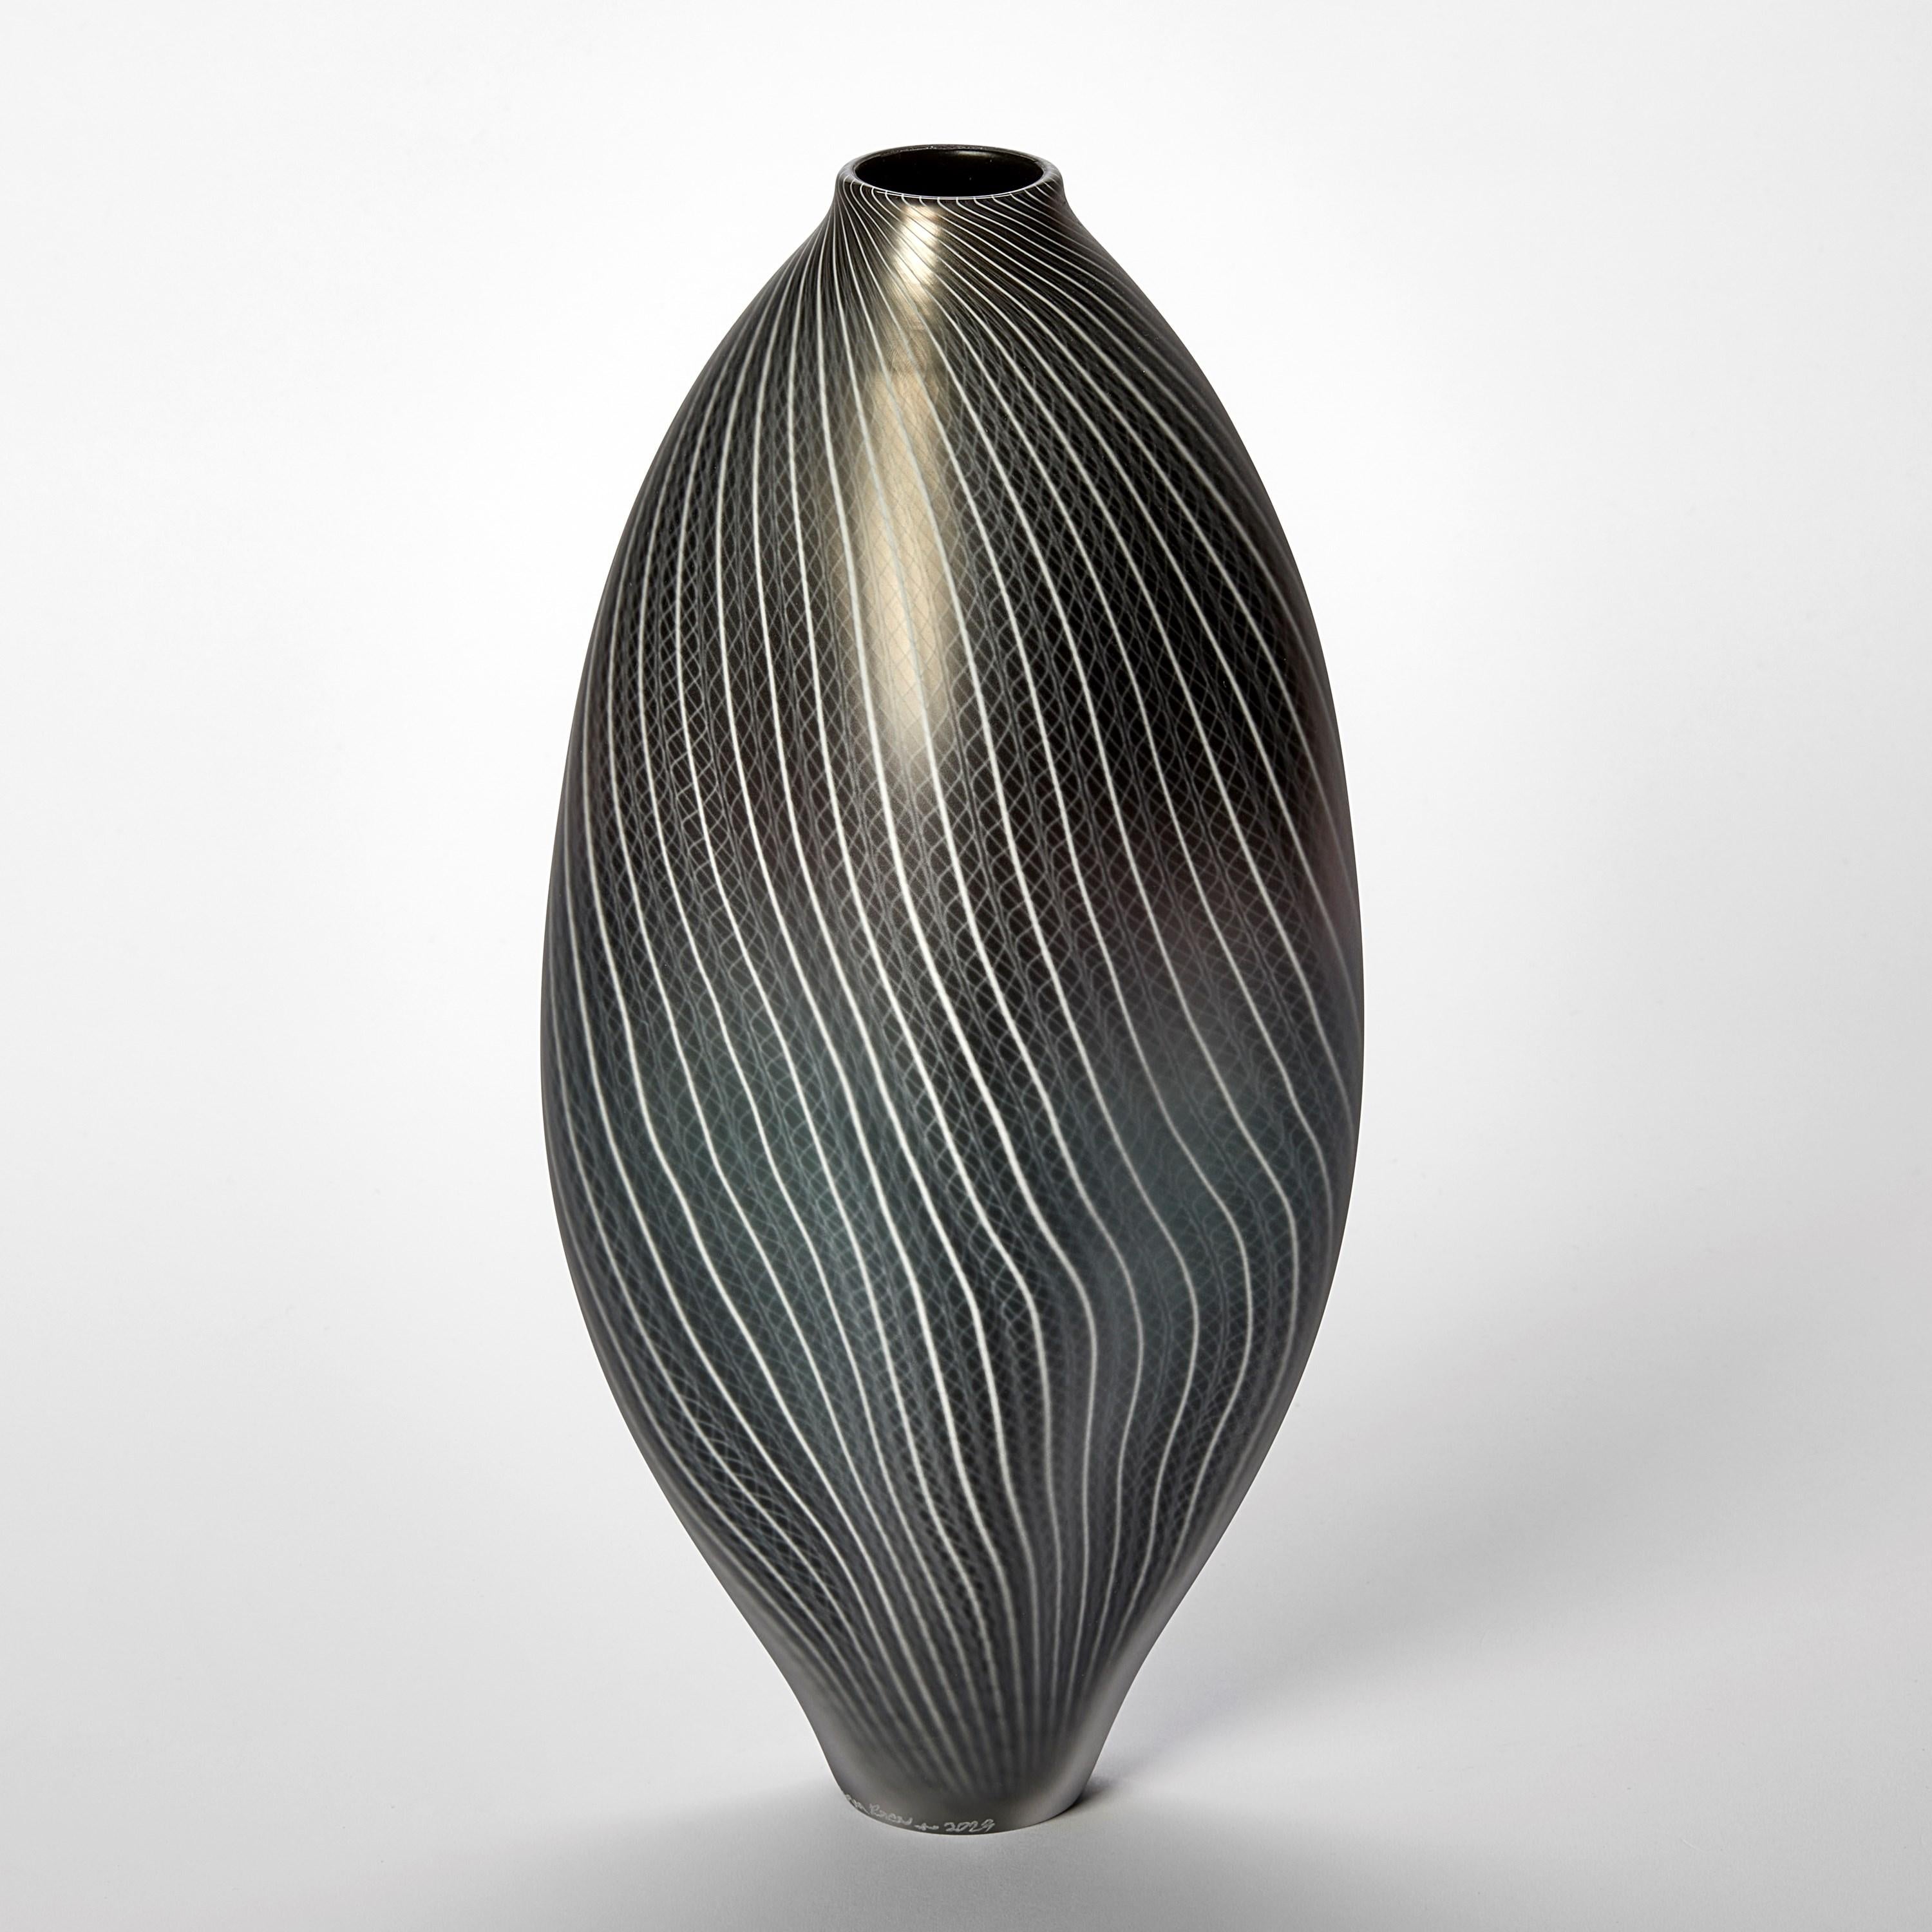 Organic Modern  Stratiform 2.1.001, white & metallic grey handblown glass vessel by Liam Reeves For Sale